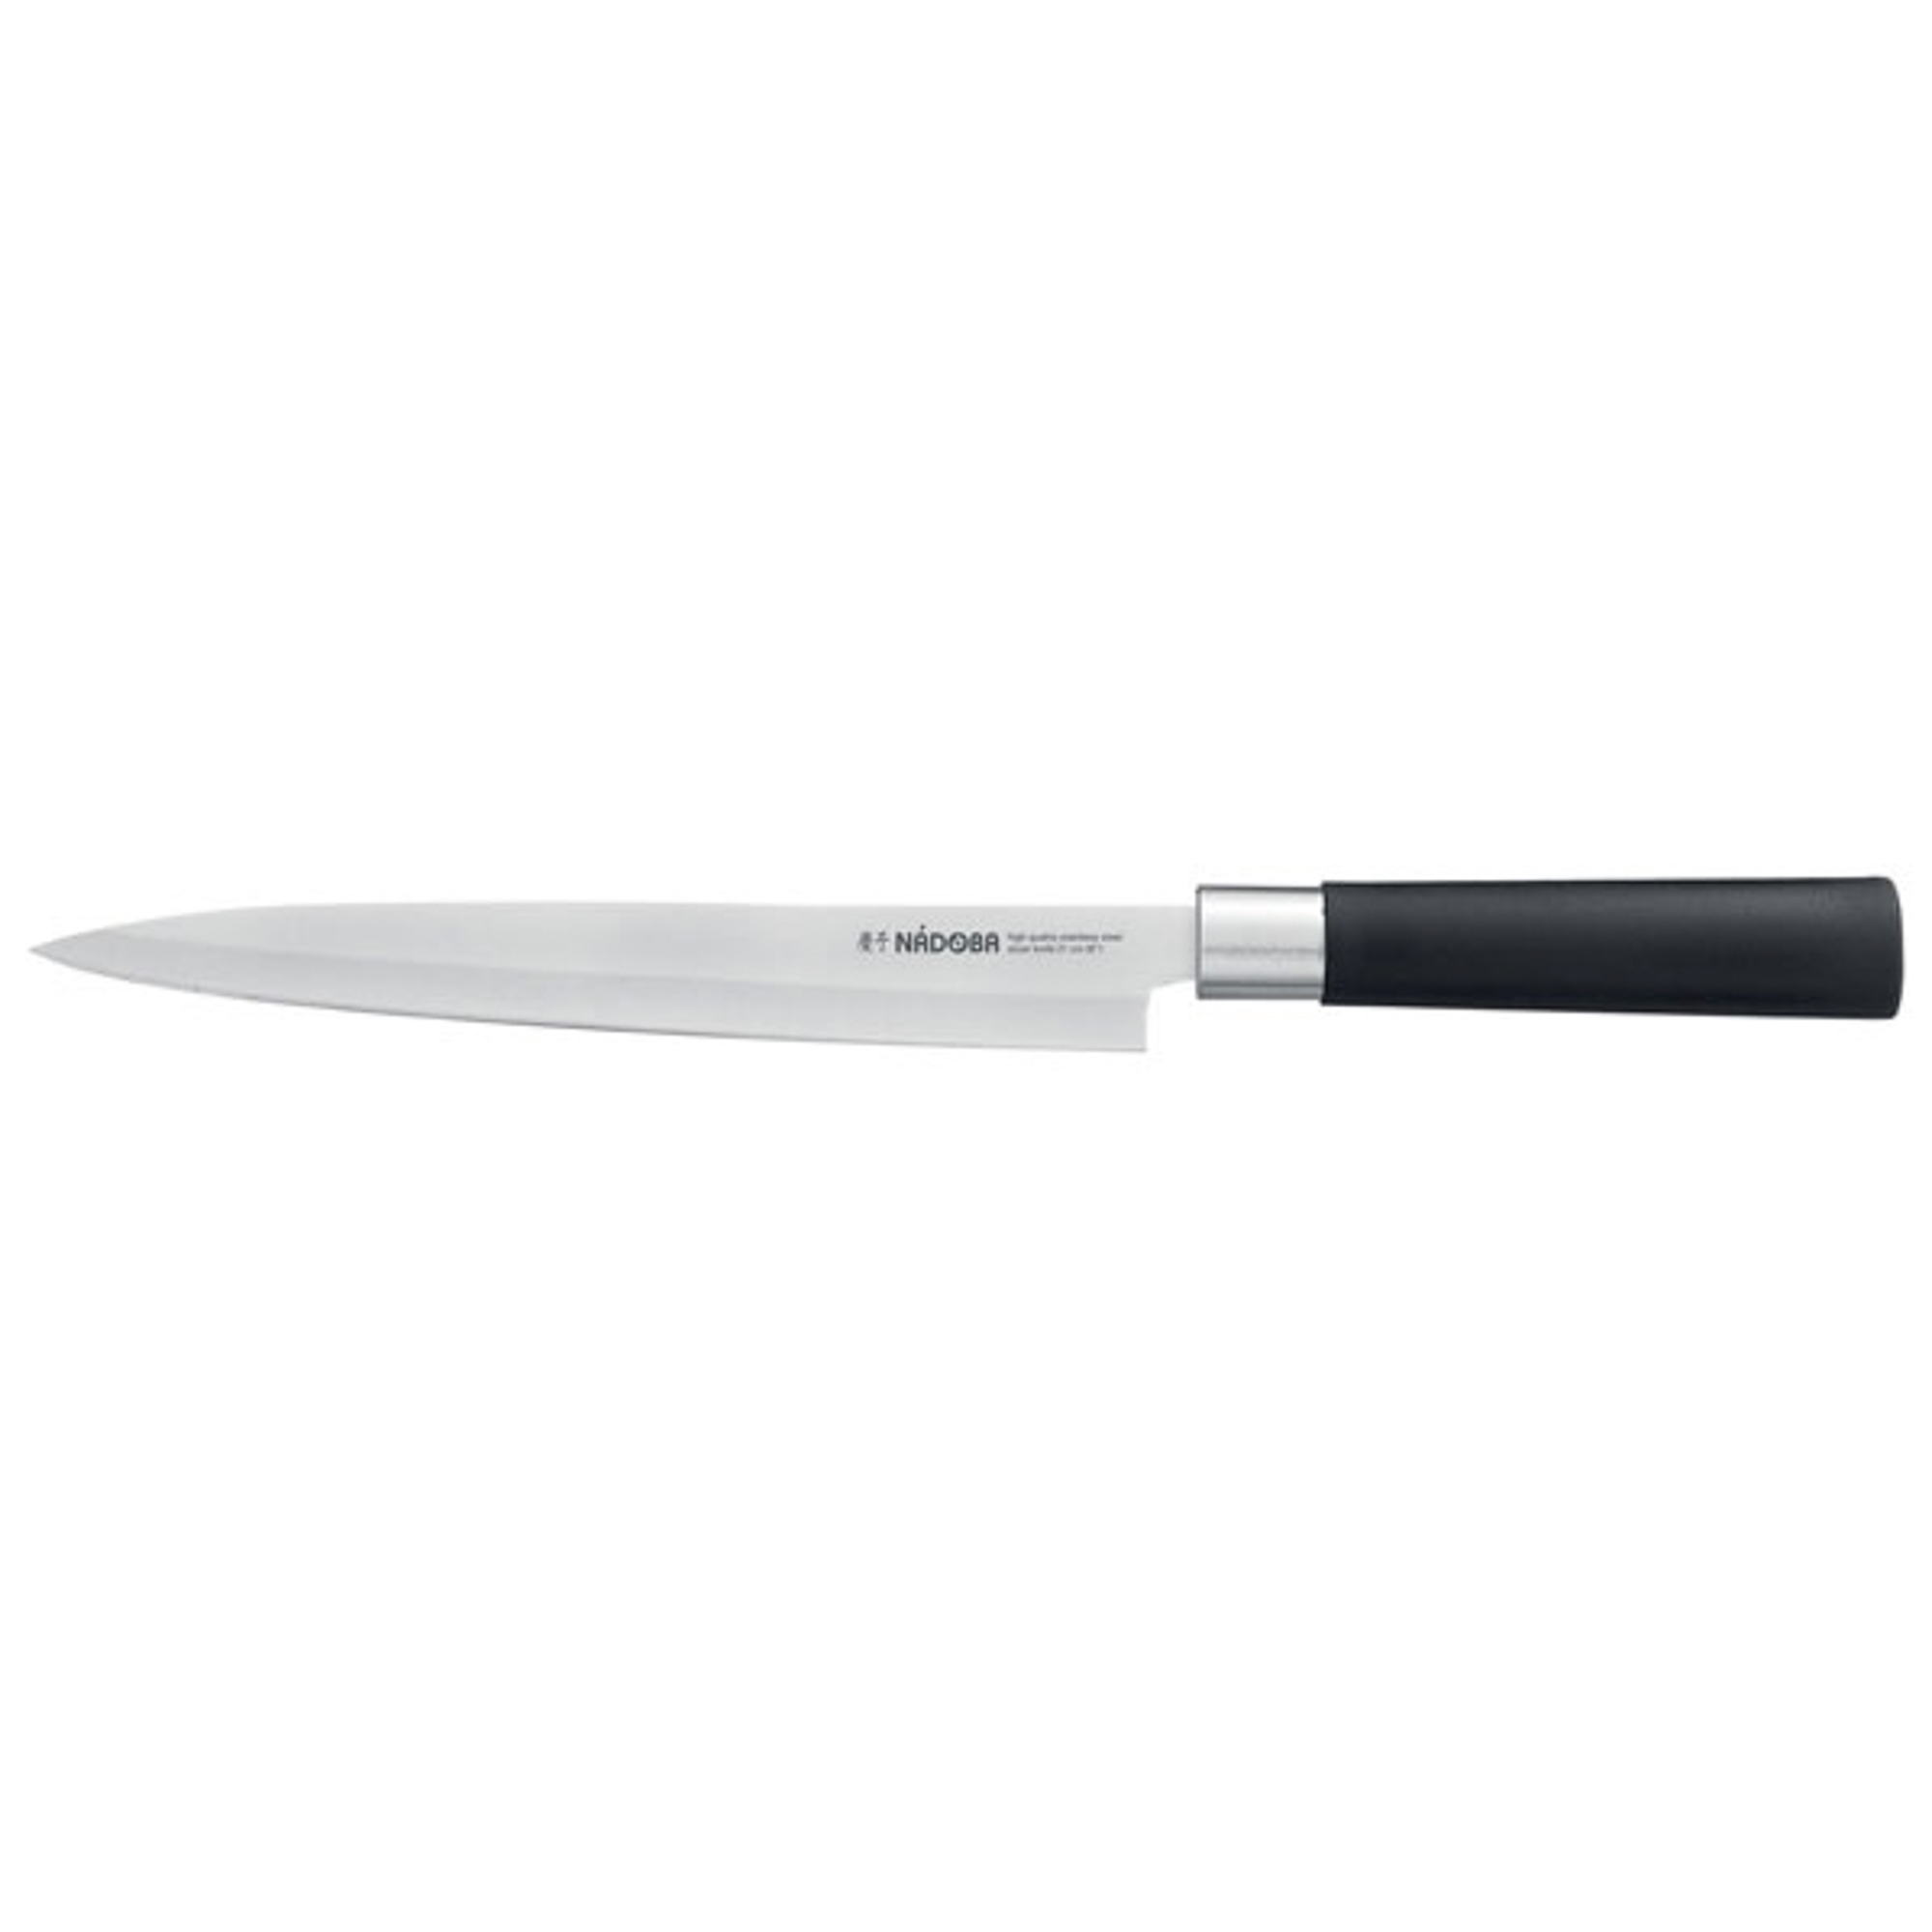 Нож 20 см Nadoba keiko нож универсальный nadoba keiko 13 см